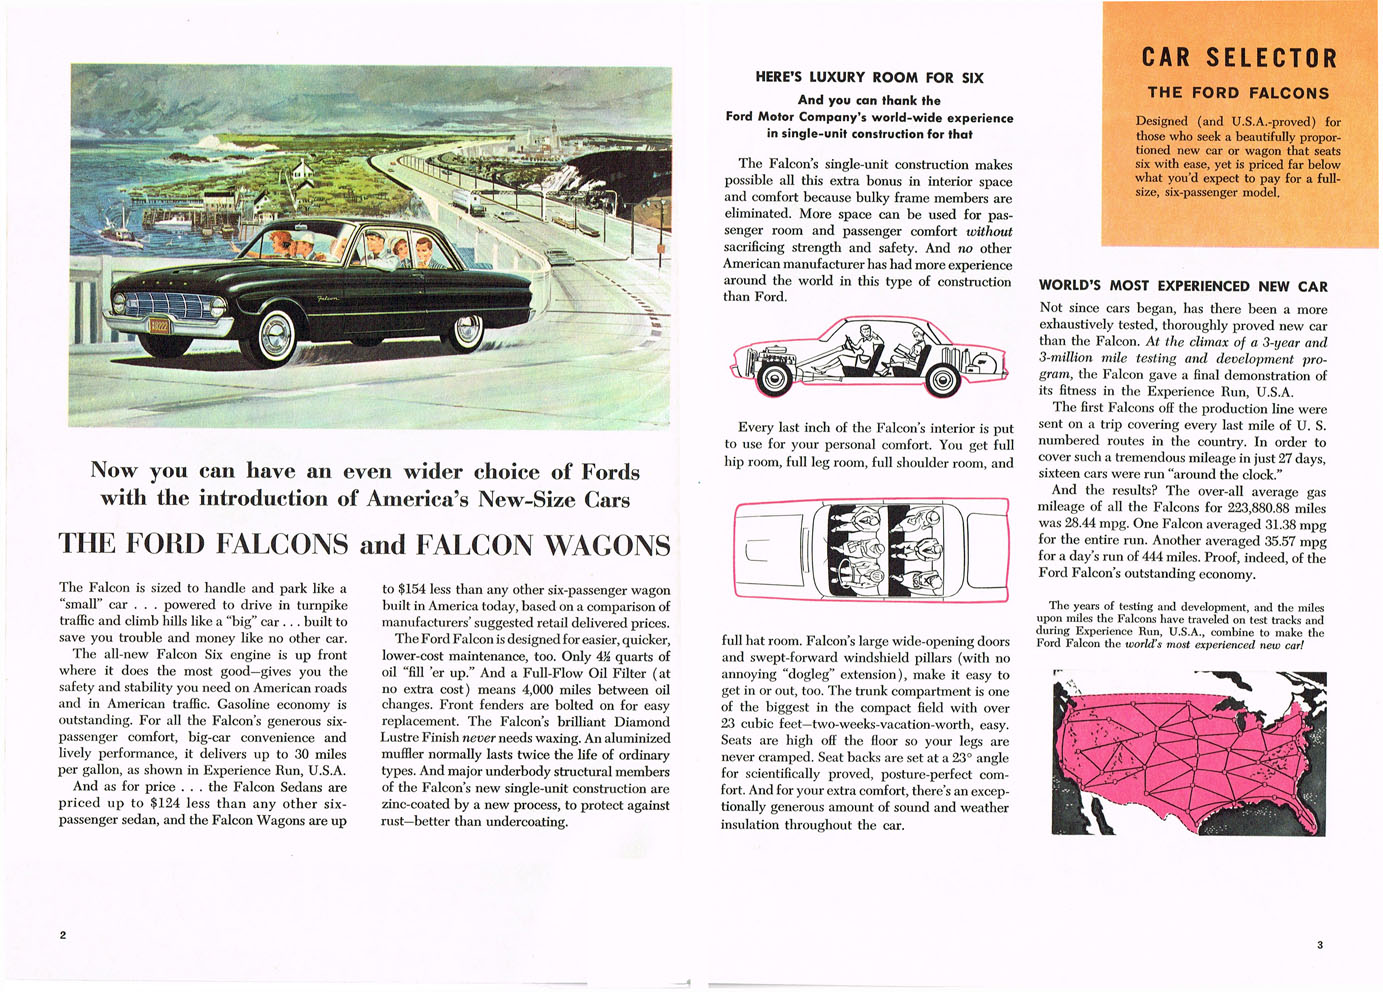 n_1960 Ford Falcon Booklet-02-03.jpg